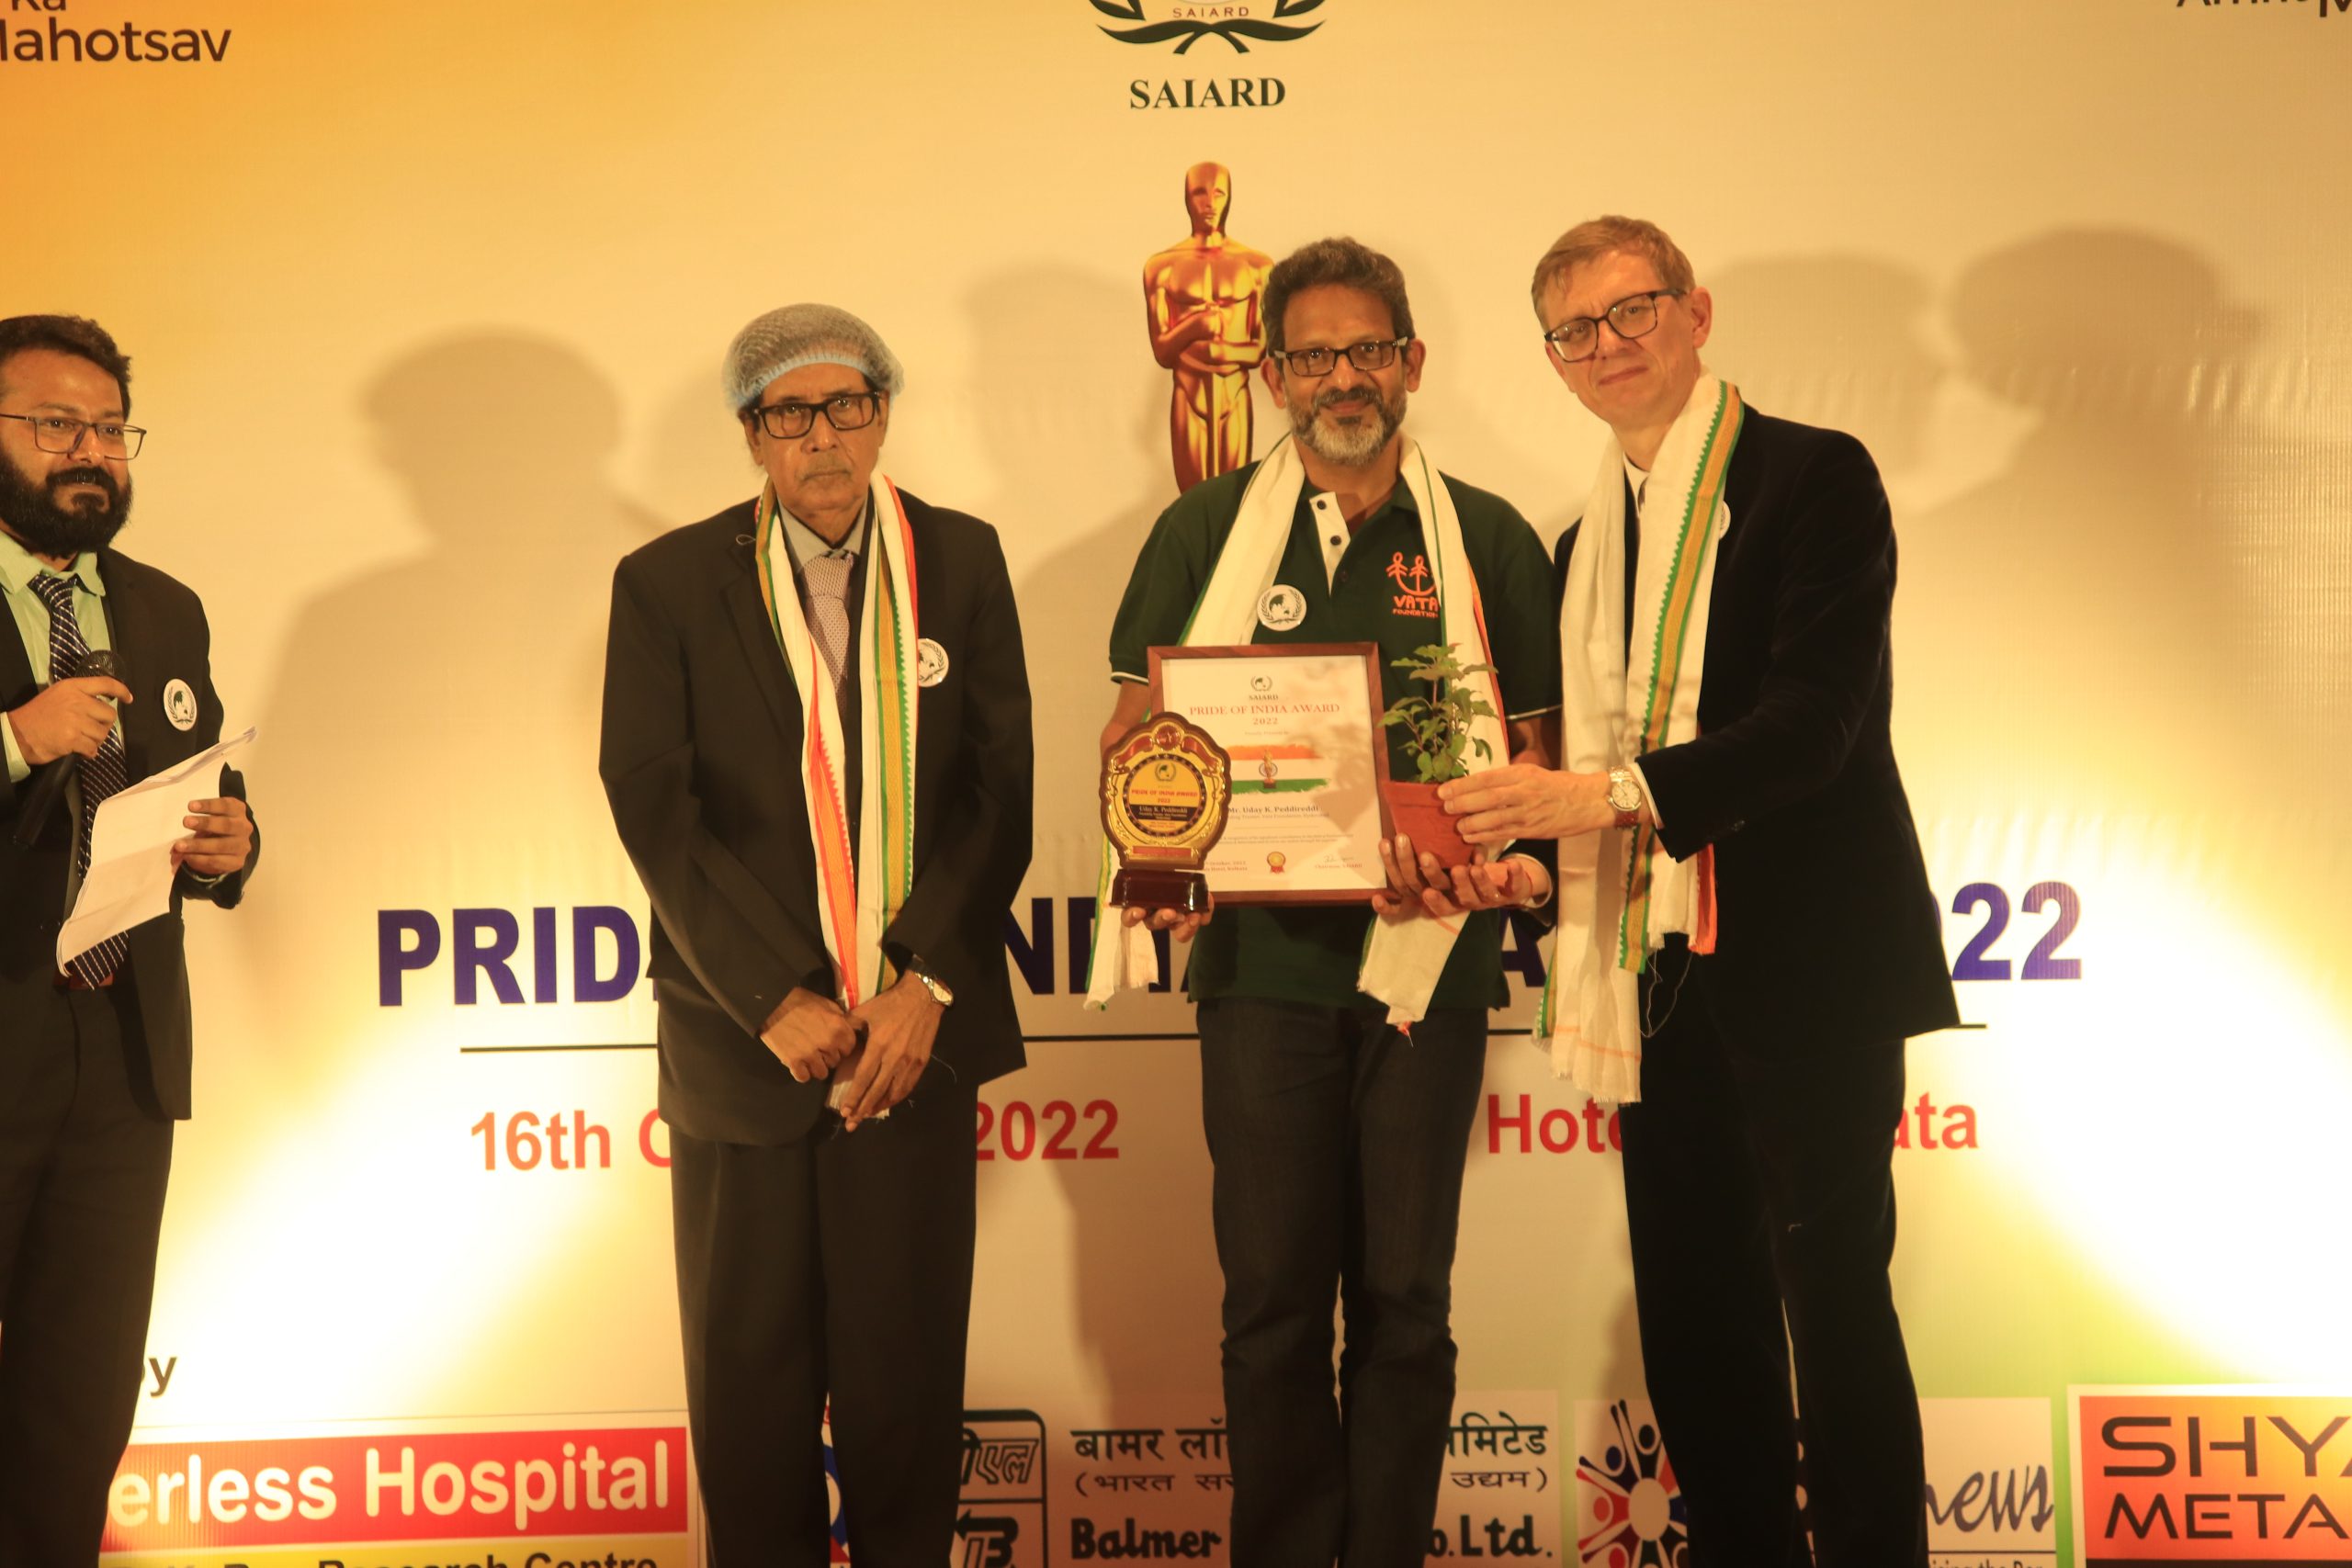 SAIARD Pride of India Award Ceremony 2022